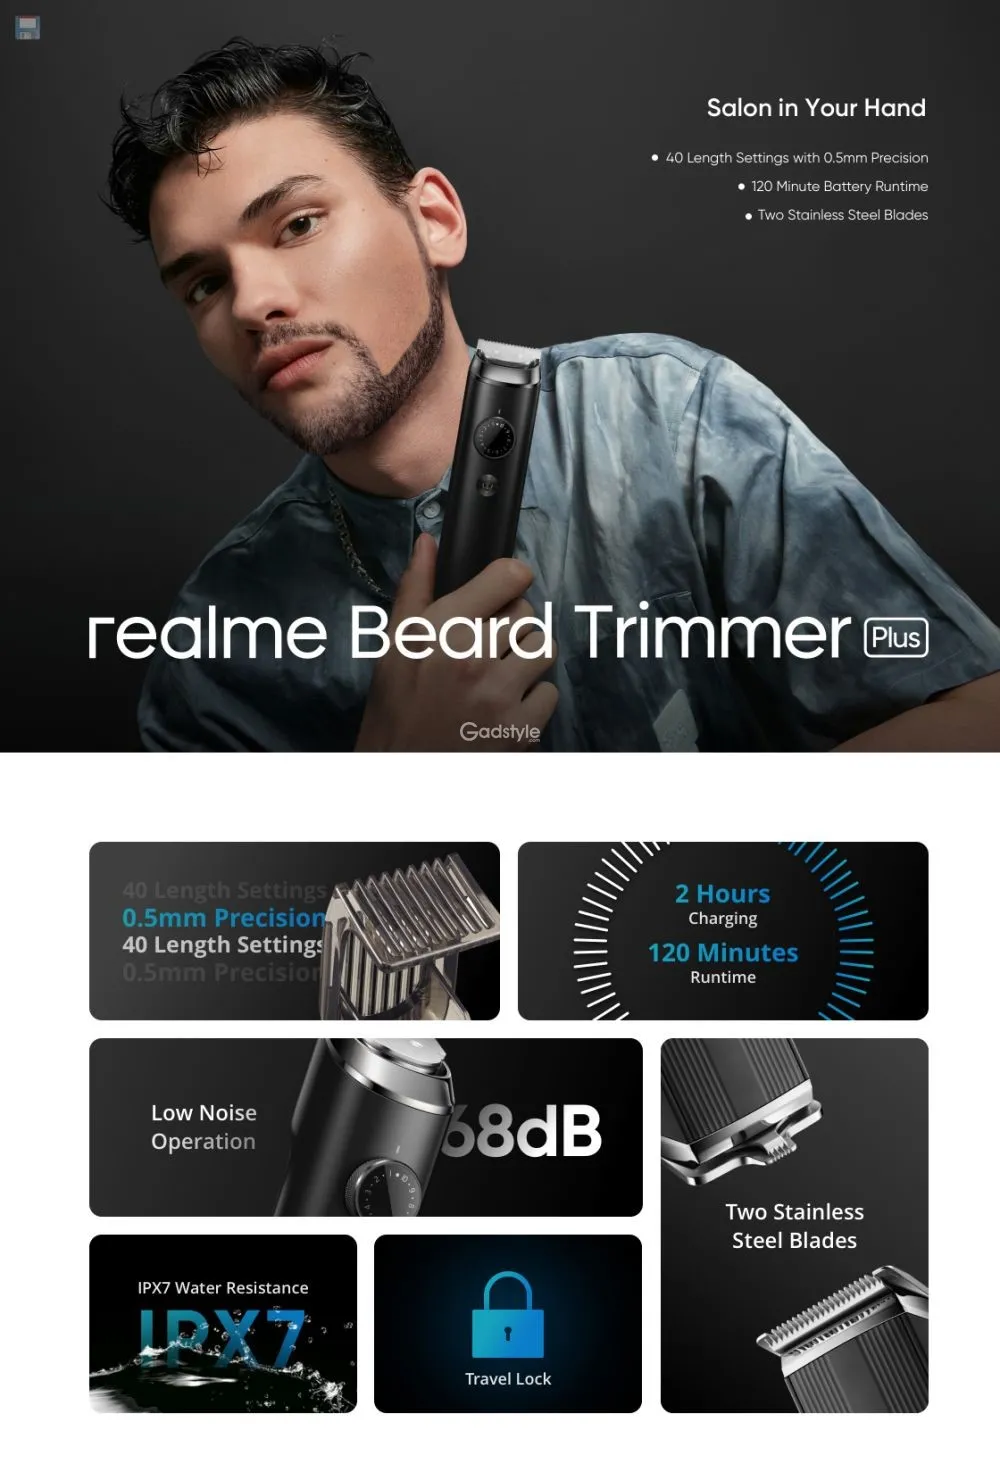 Realme Beard Trimmer Plus (1)